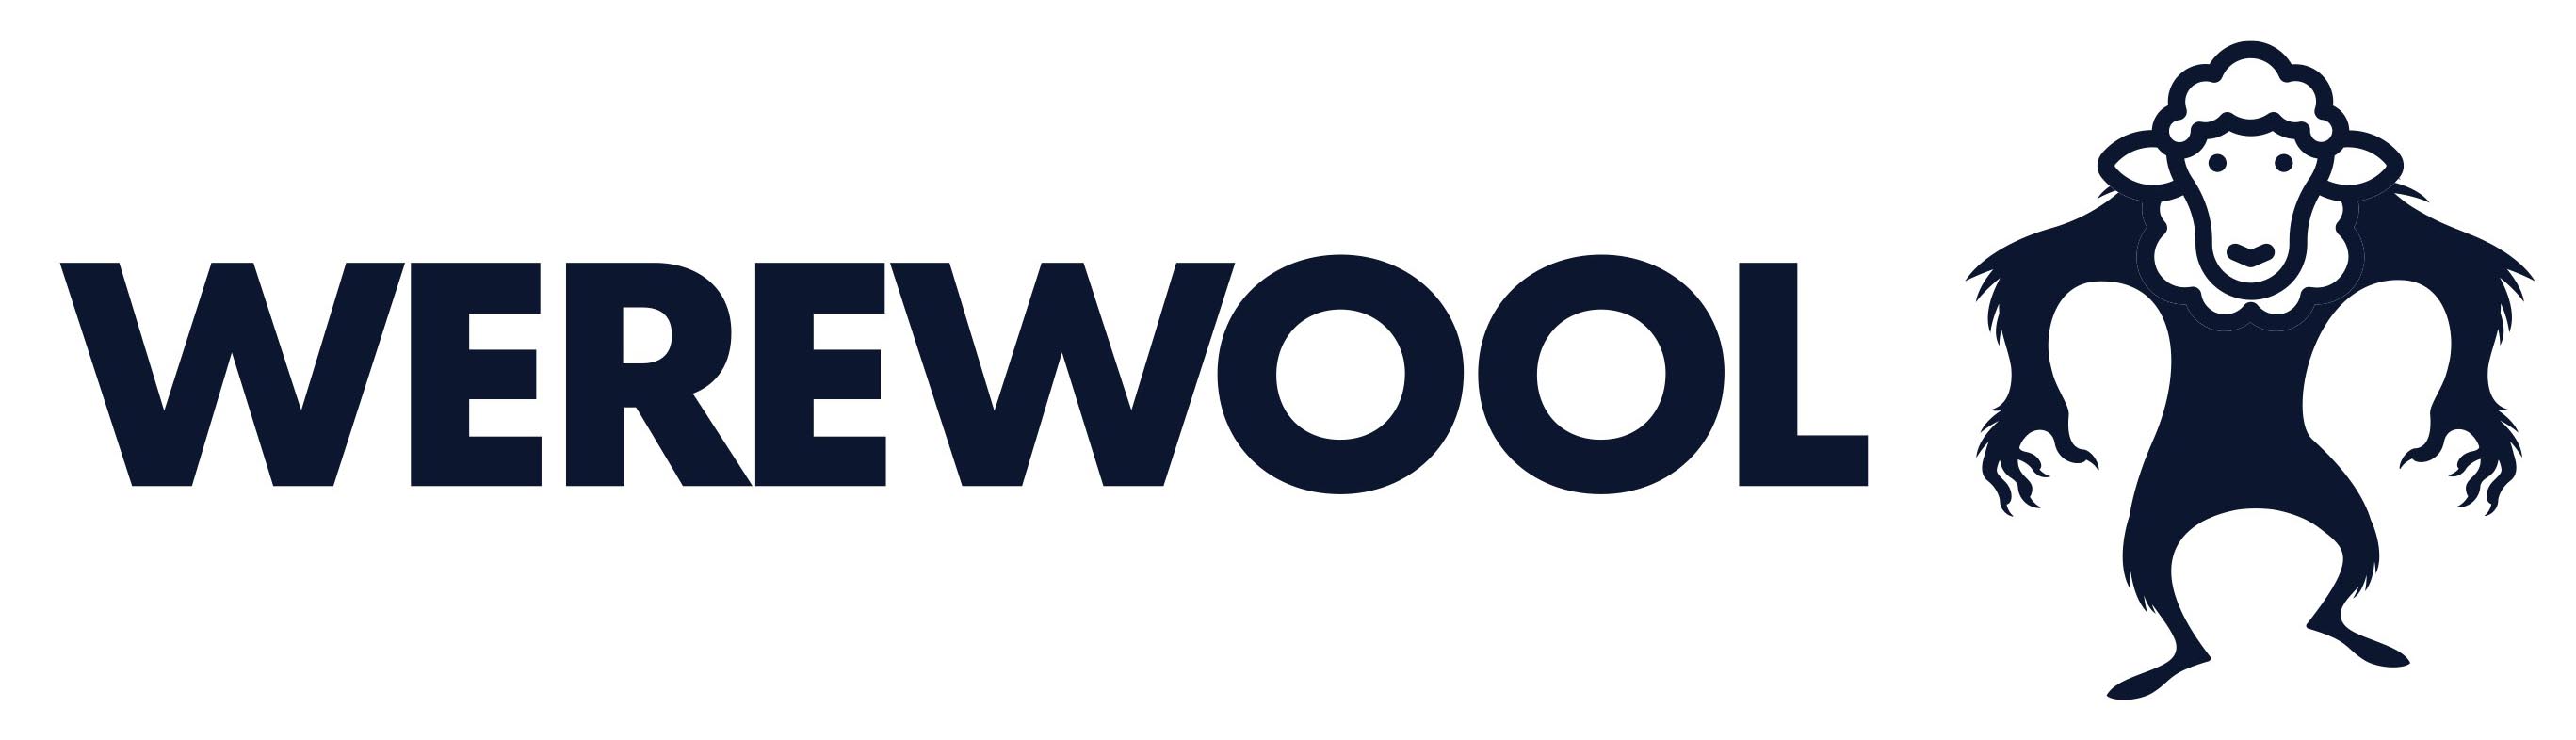 werewool logo